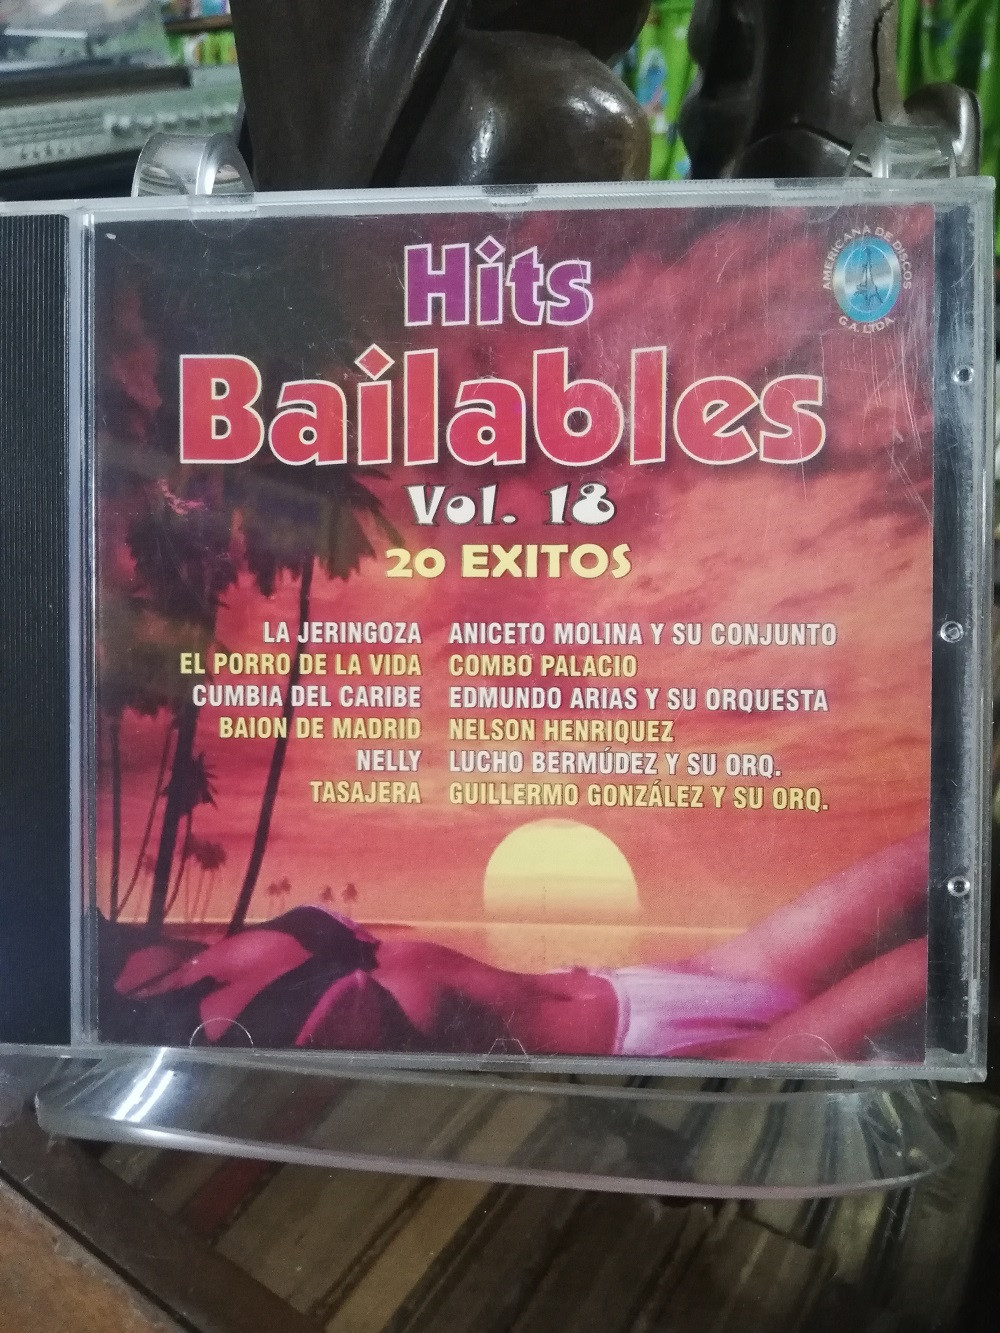 Imagen CD HITS BAILABLES - HITS BAILABLES VOL. 18